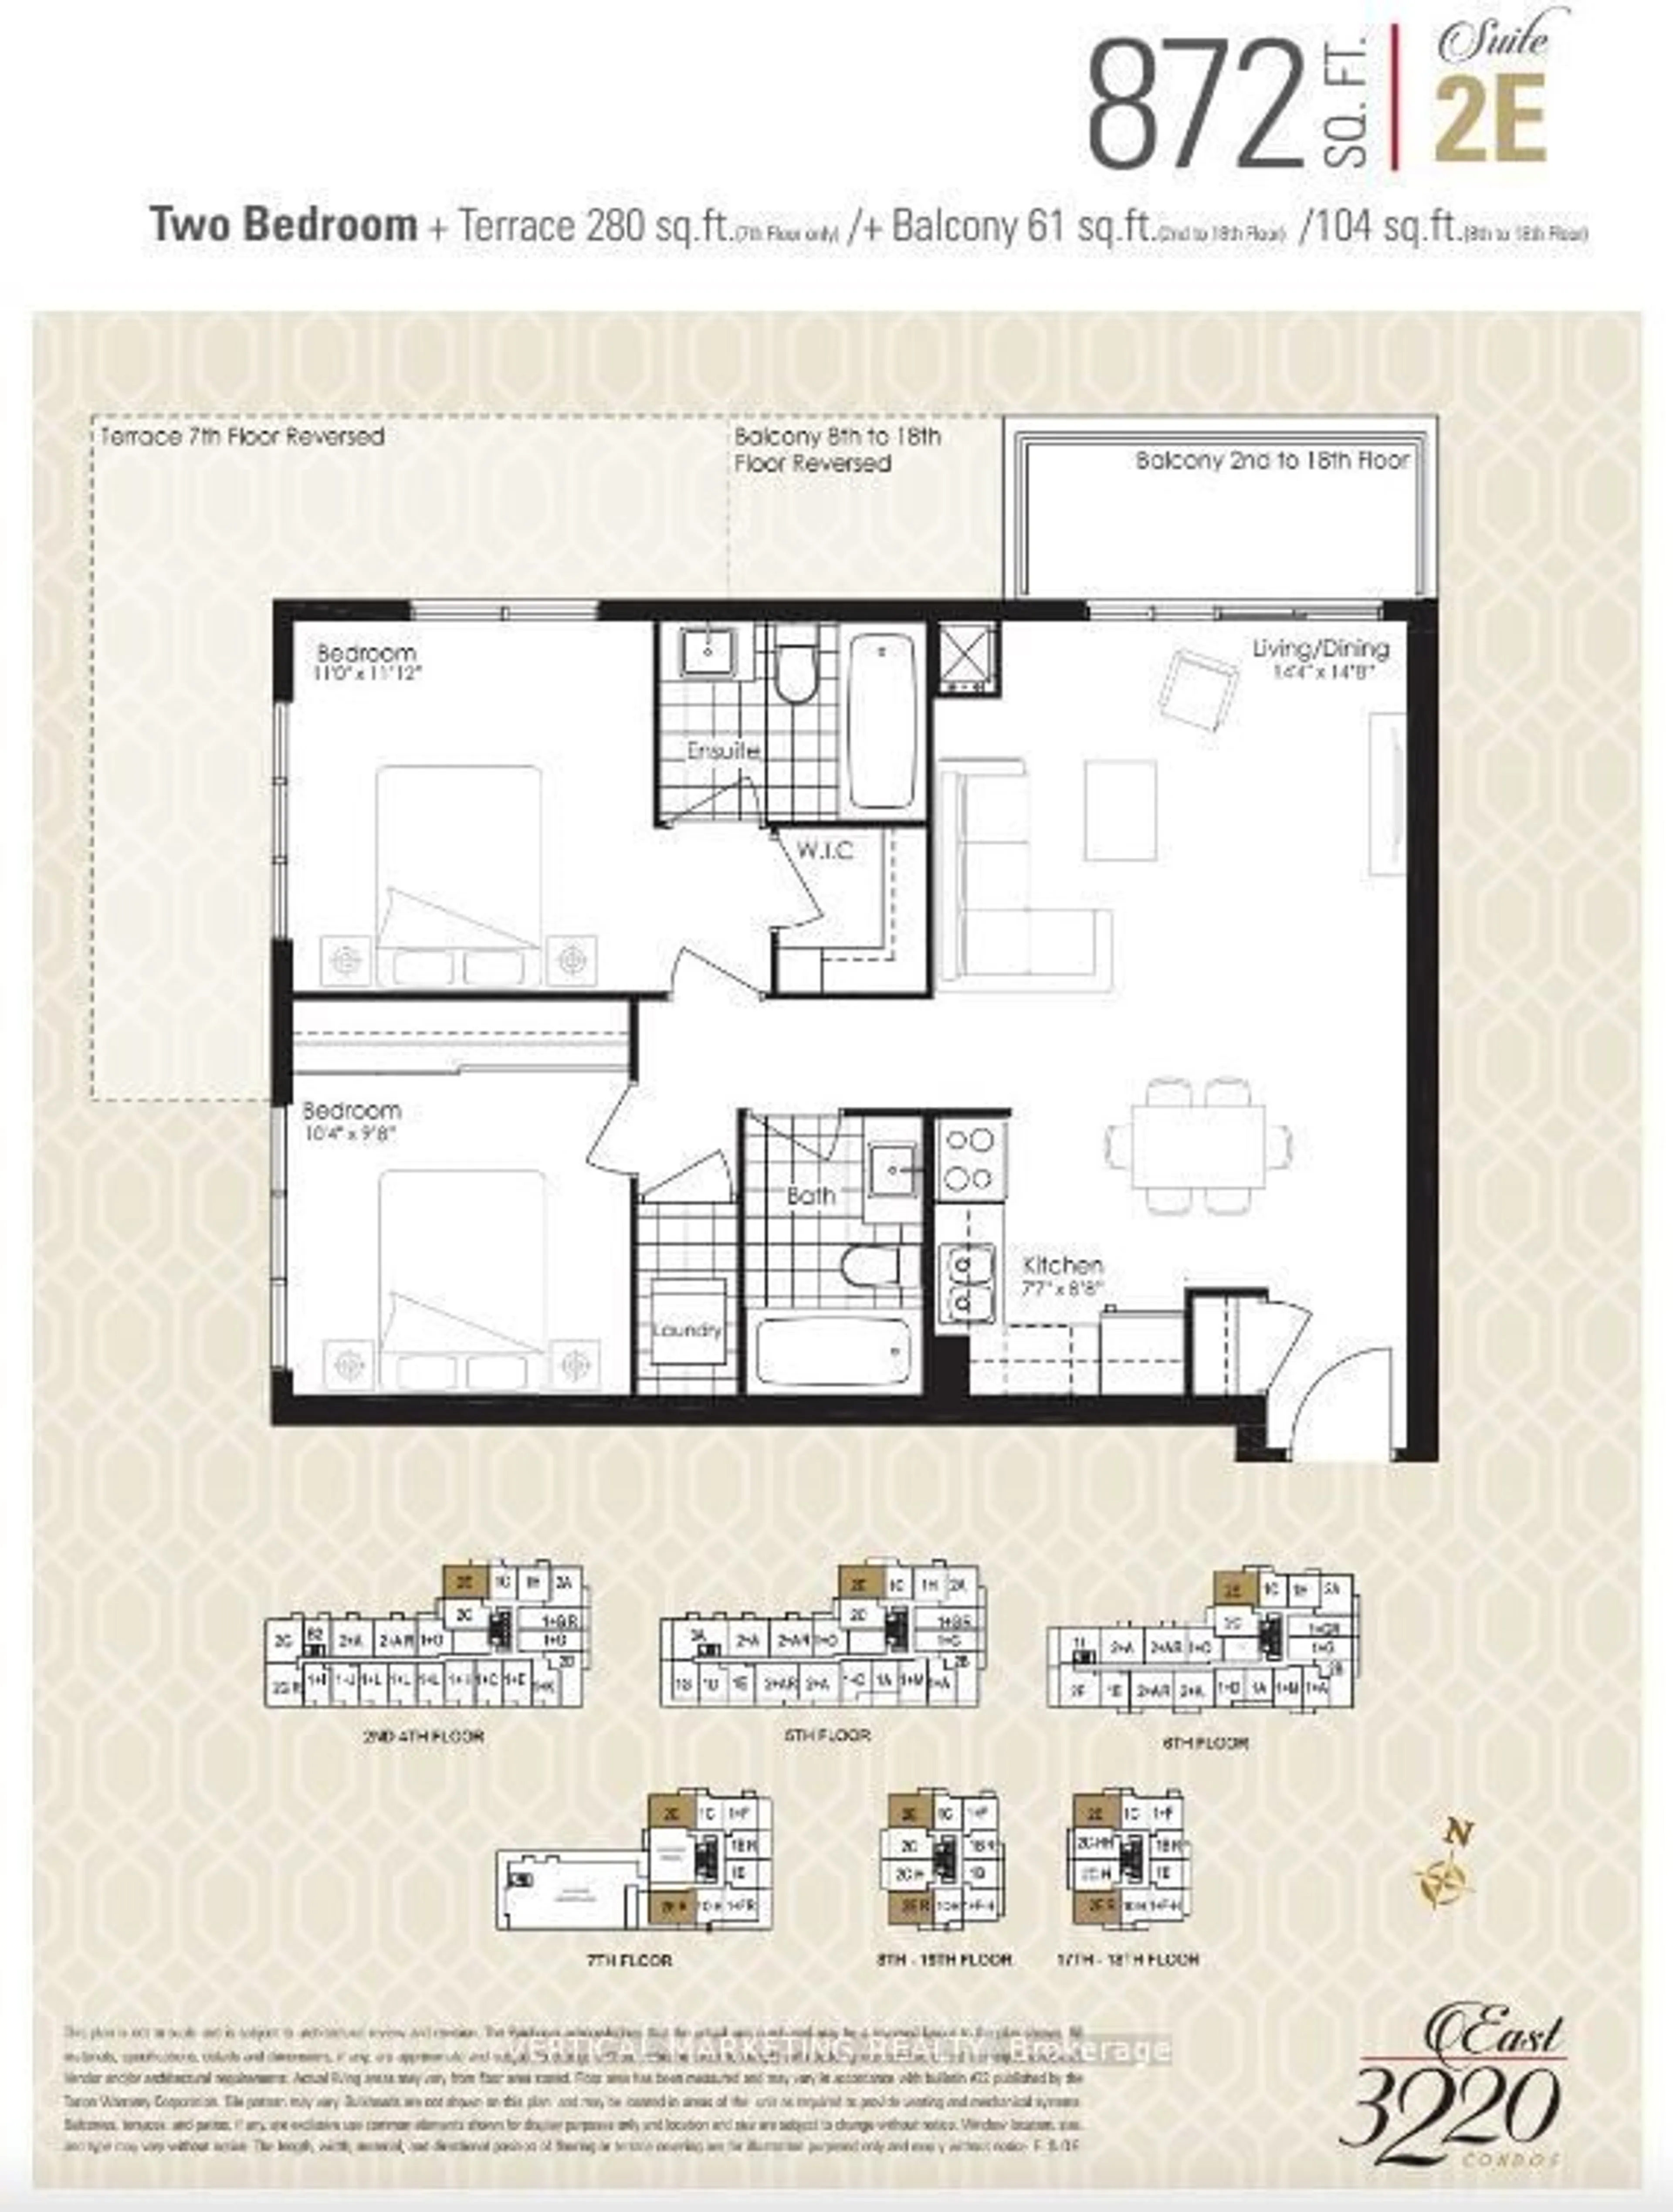 Floor plan for 3220 Sheppard Ave #402, Toronto Ontario M1T 0B7